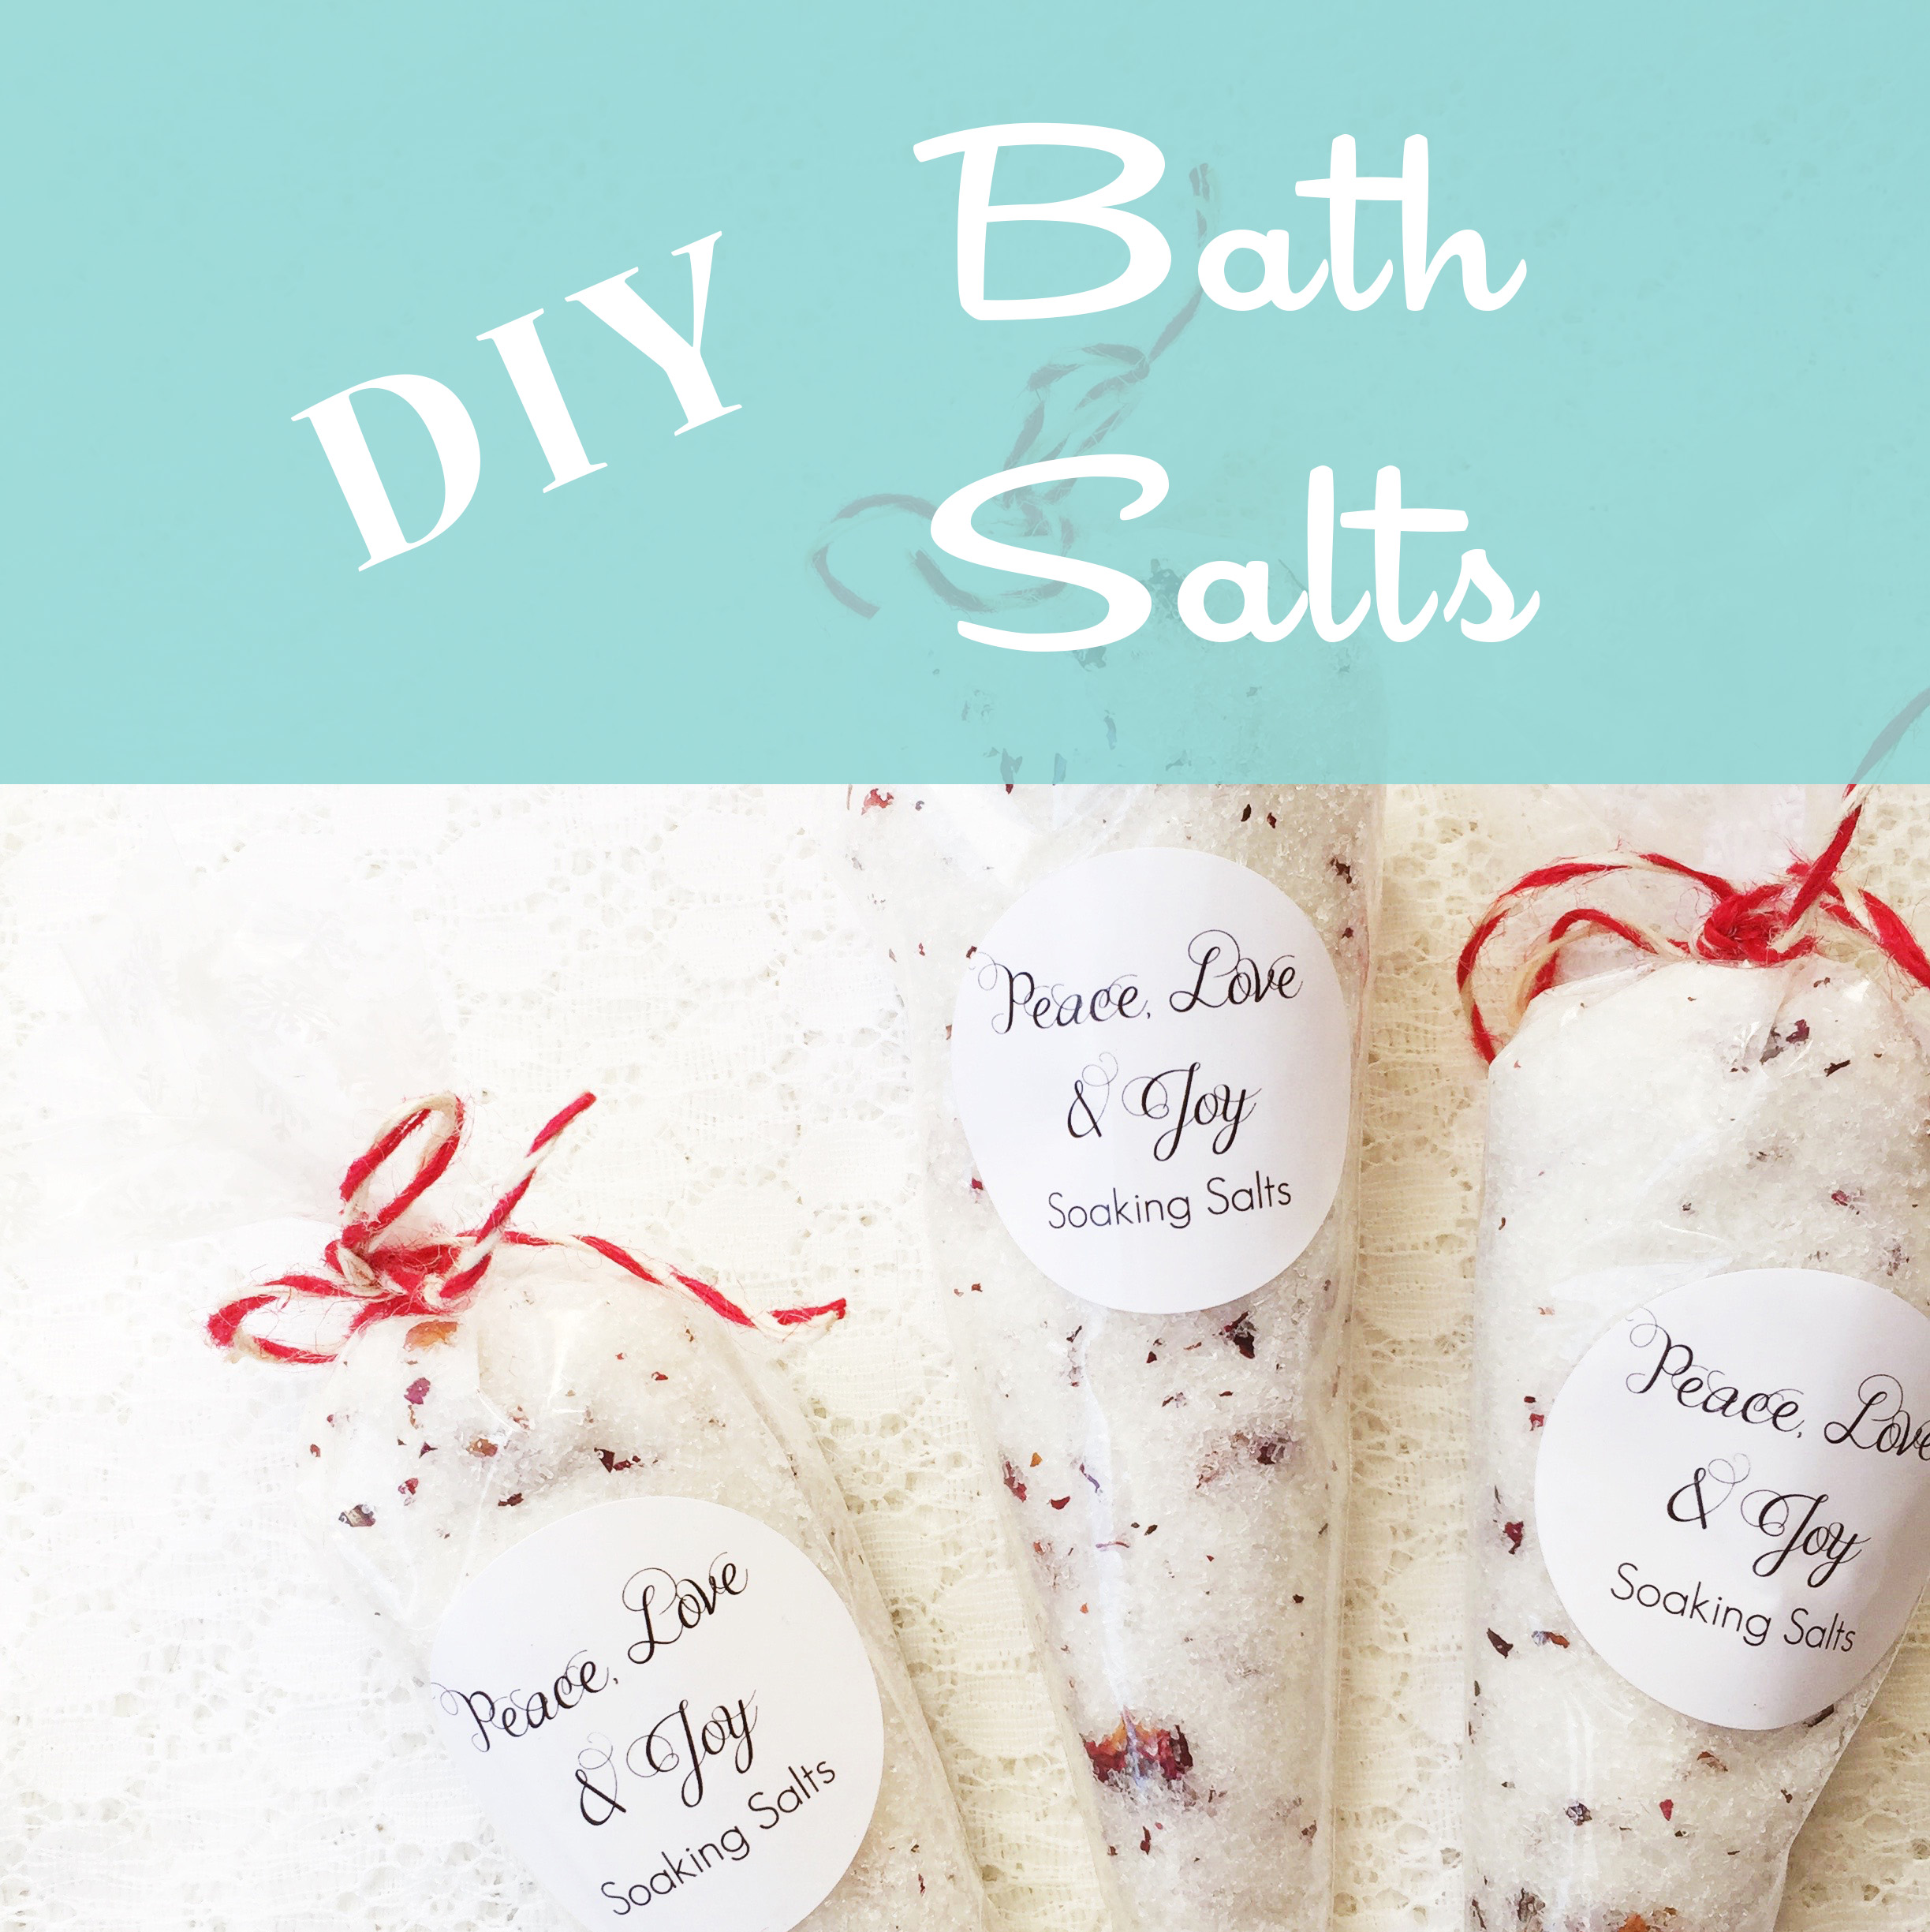 Santa's Workshop: DIY Bath Salt Recipes ~ Essential Oils ~ by Bubblegum Sass